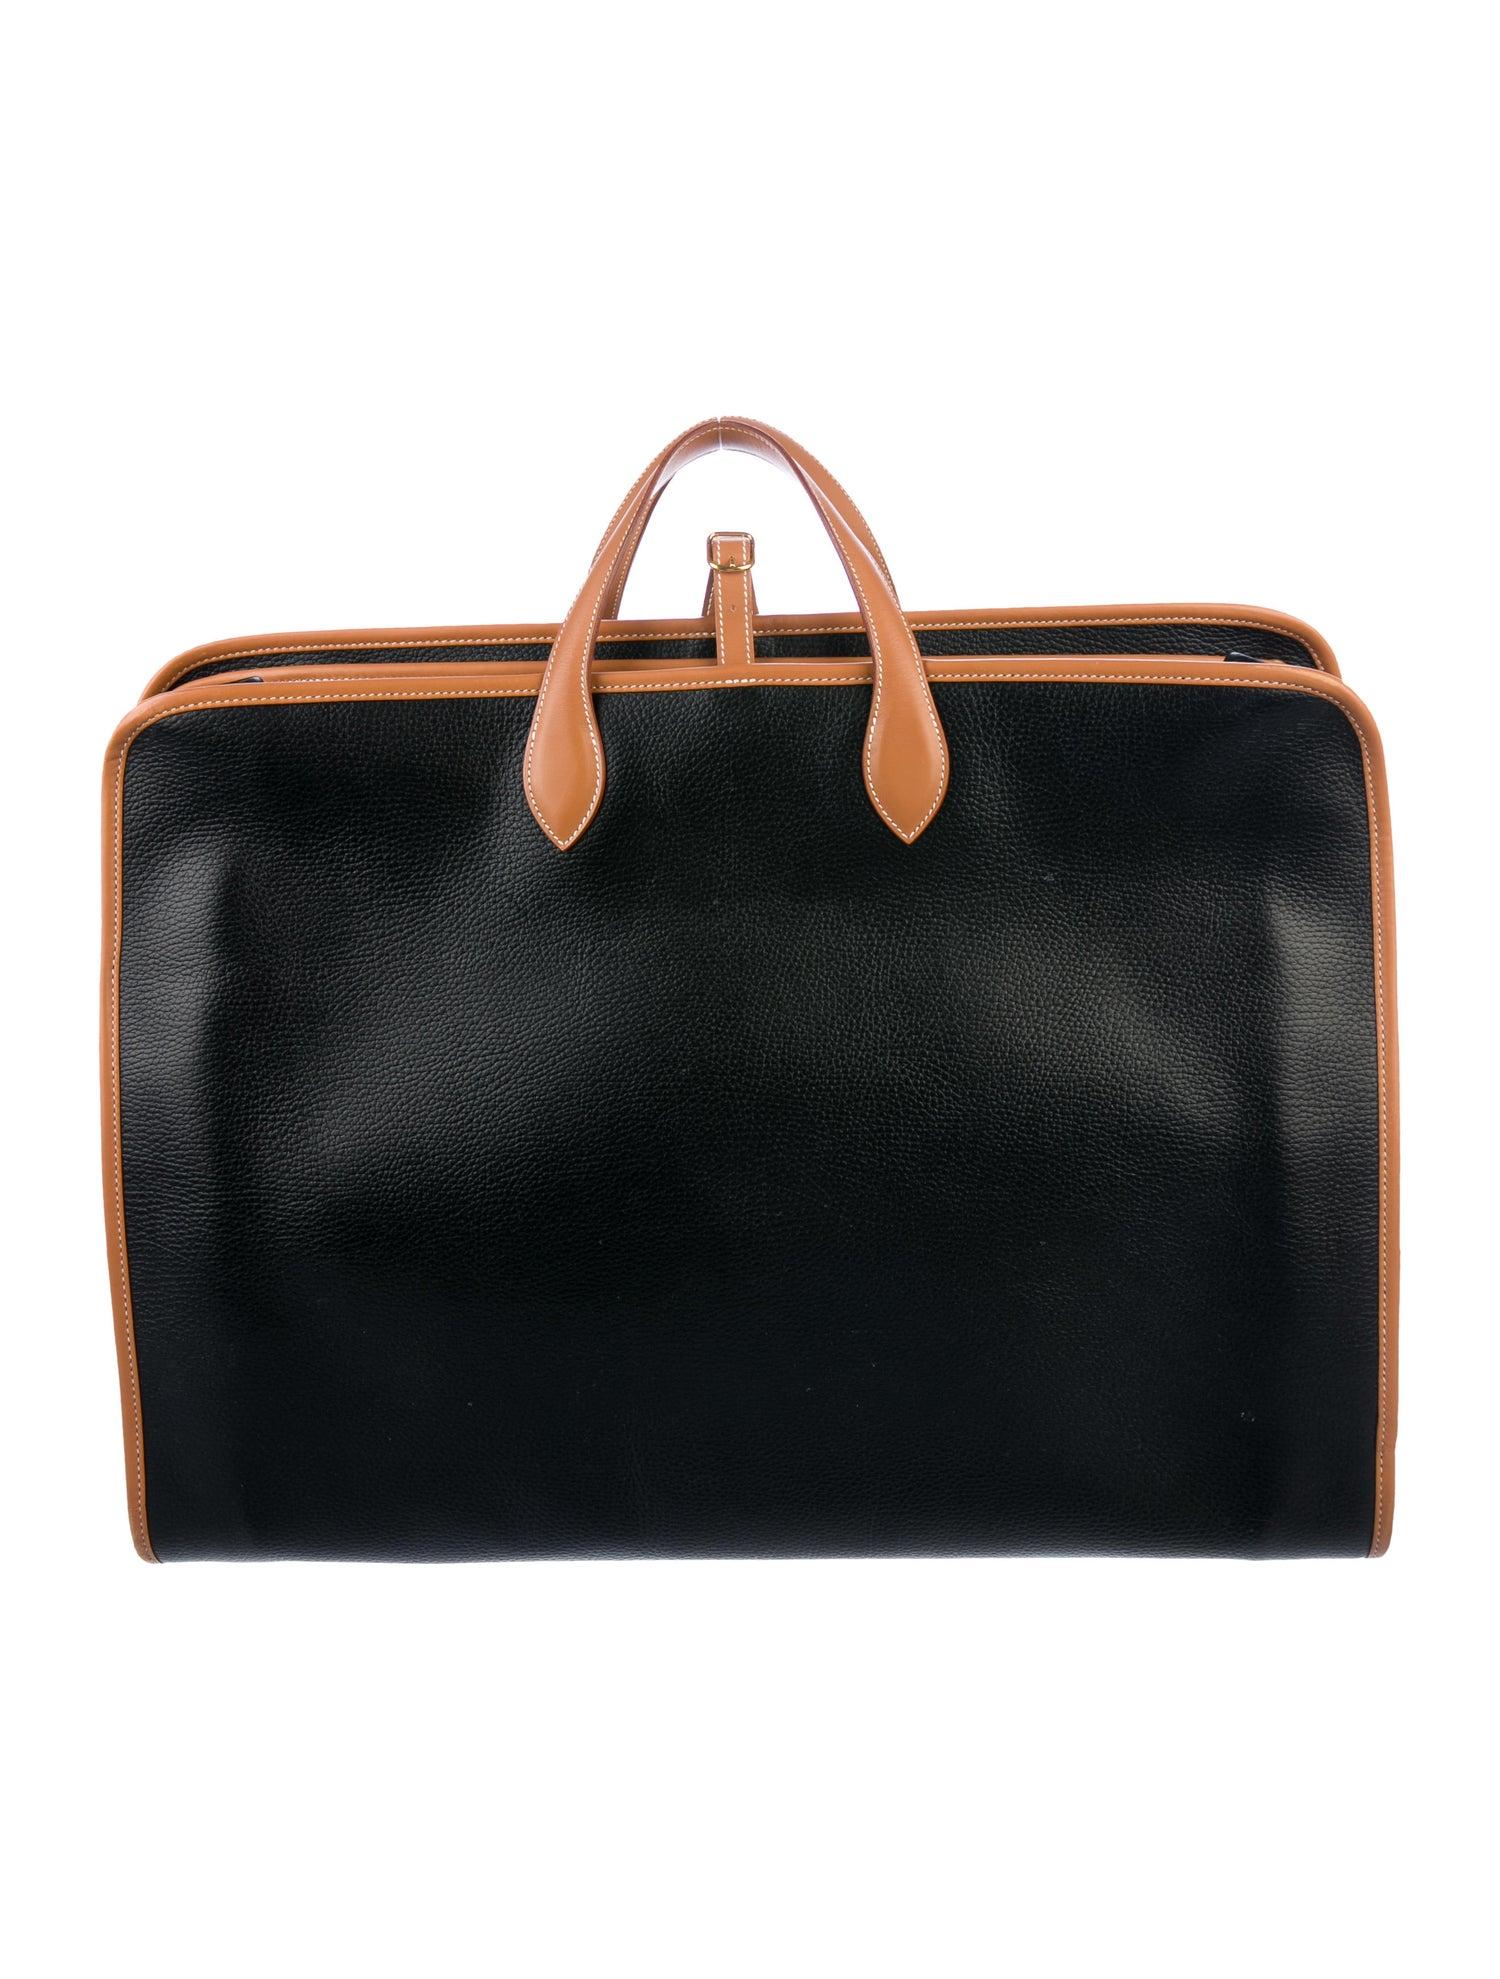 Women's or Men's Hermes Black Cognac Leather Men's Women's Carryall Top Handle Travel Tote Bag